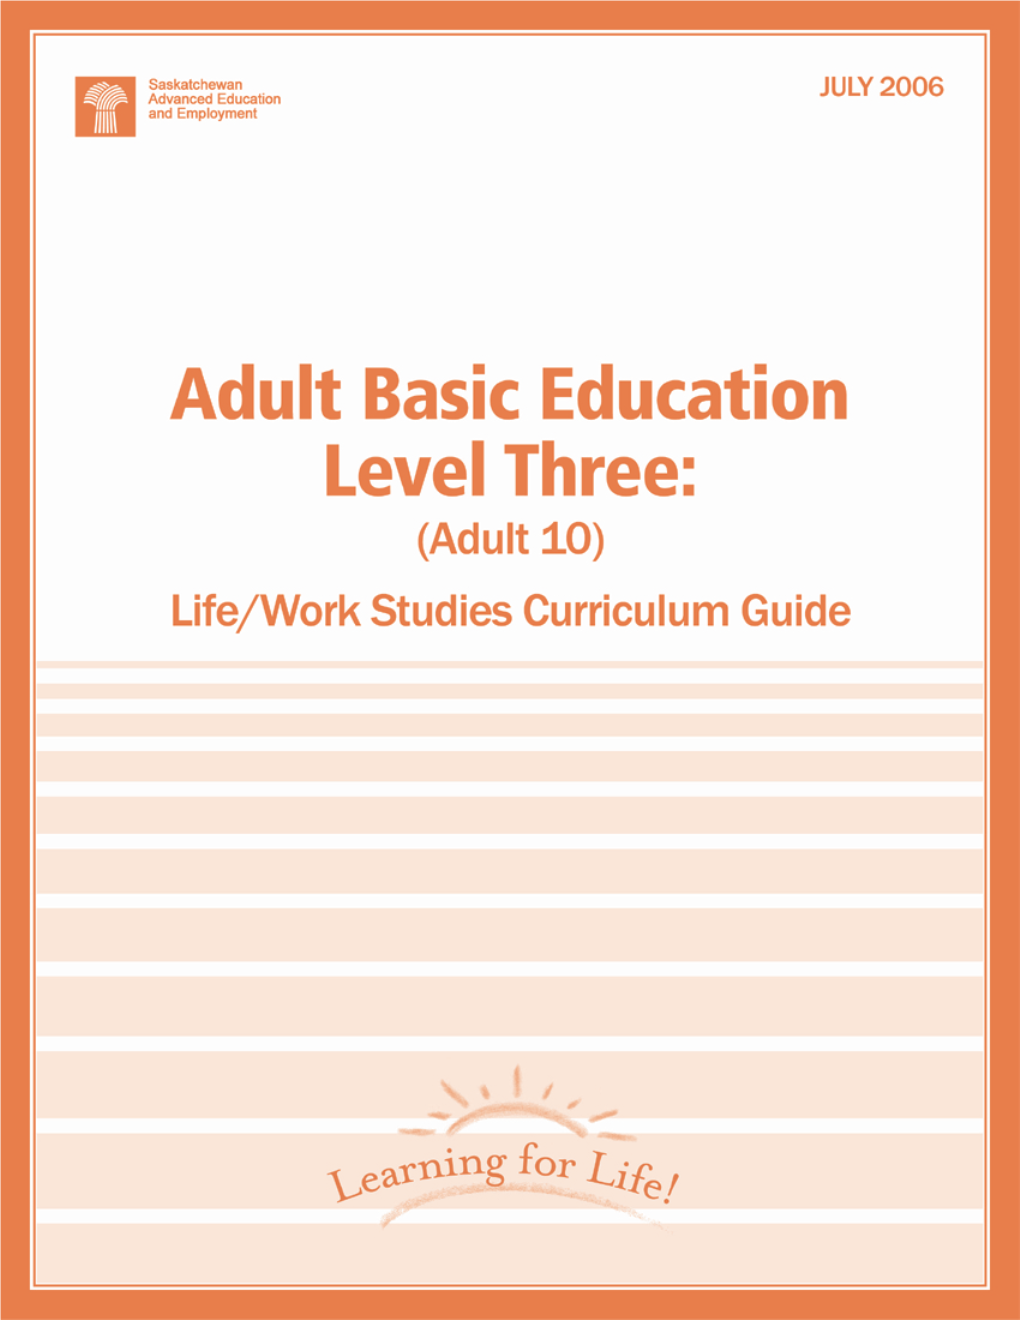 Life/Work Studies Curriculum Guide